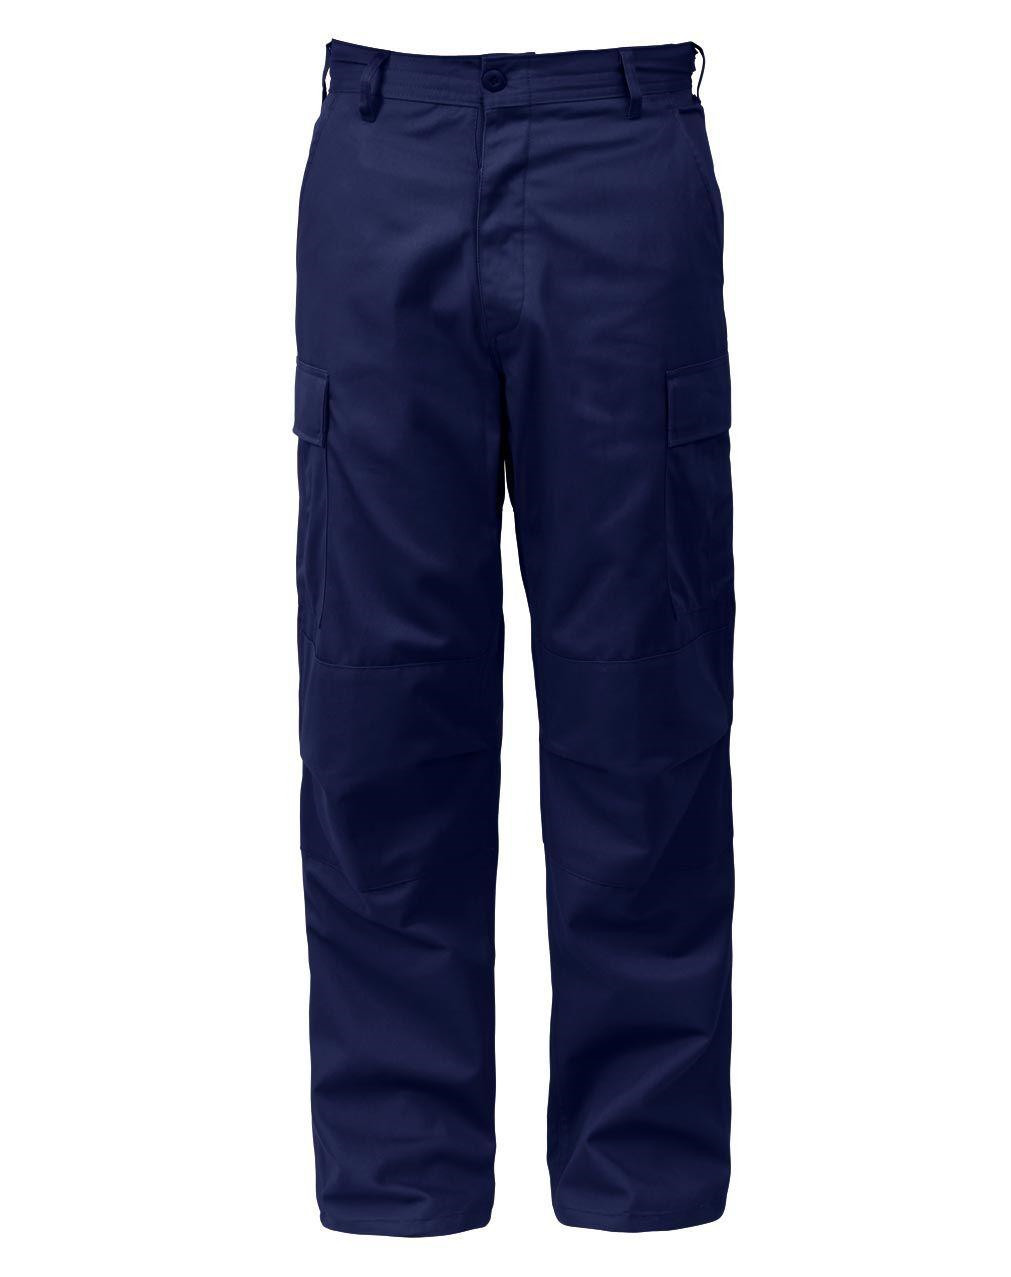 #2 - Rothco Uniform Bukser (Navy, XL)